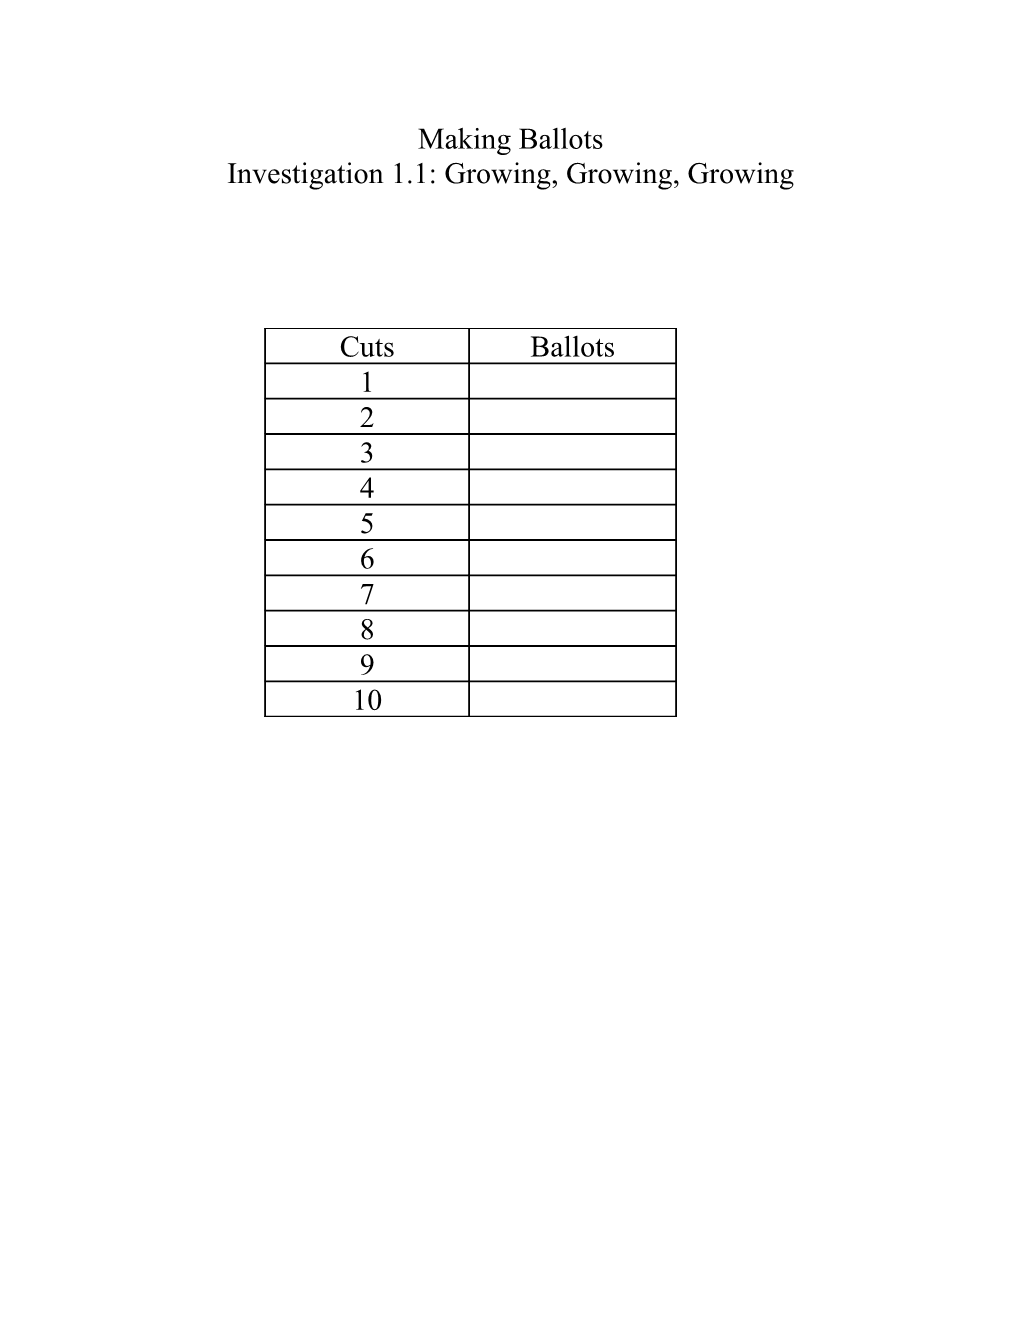 Investigation 1.1: Growing, Growing, Growing